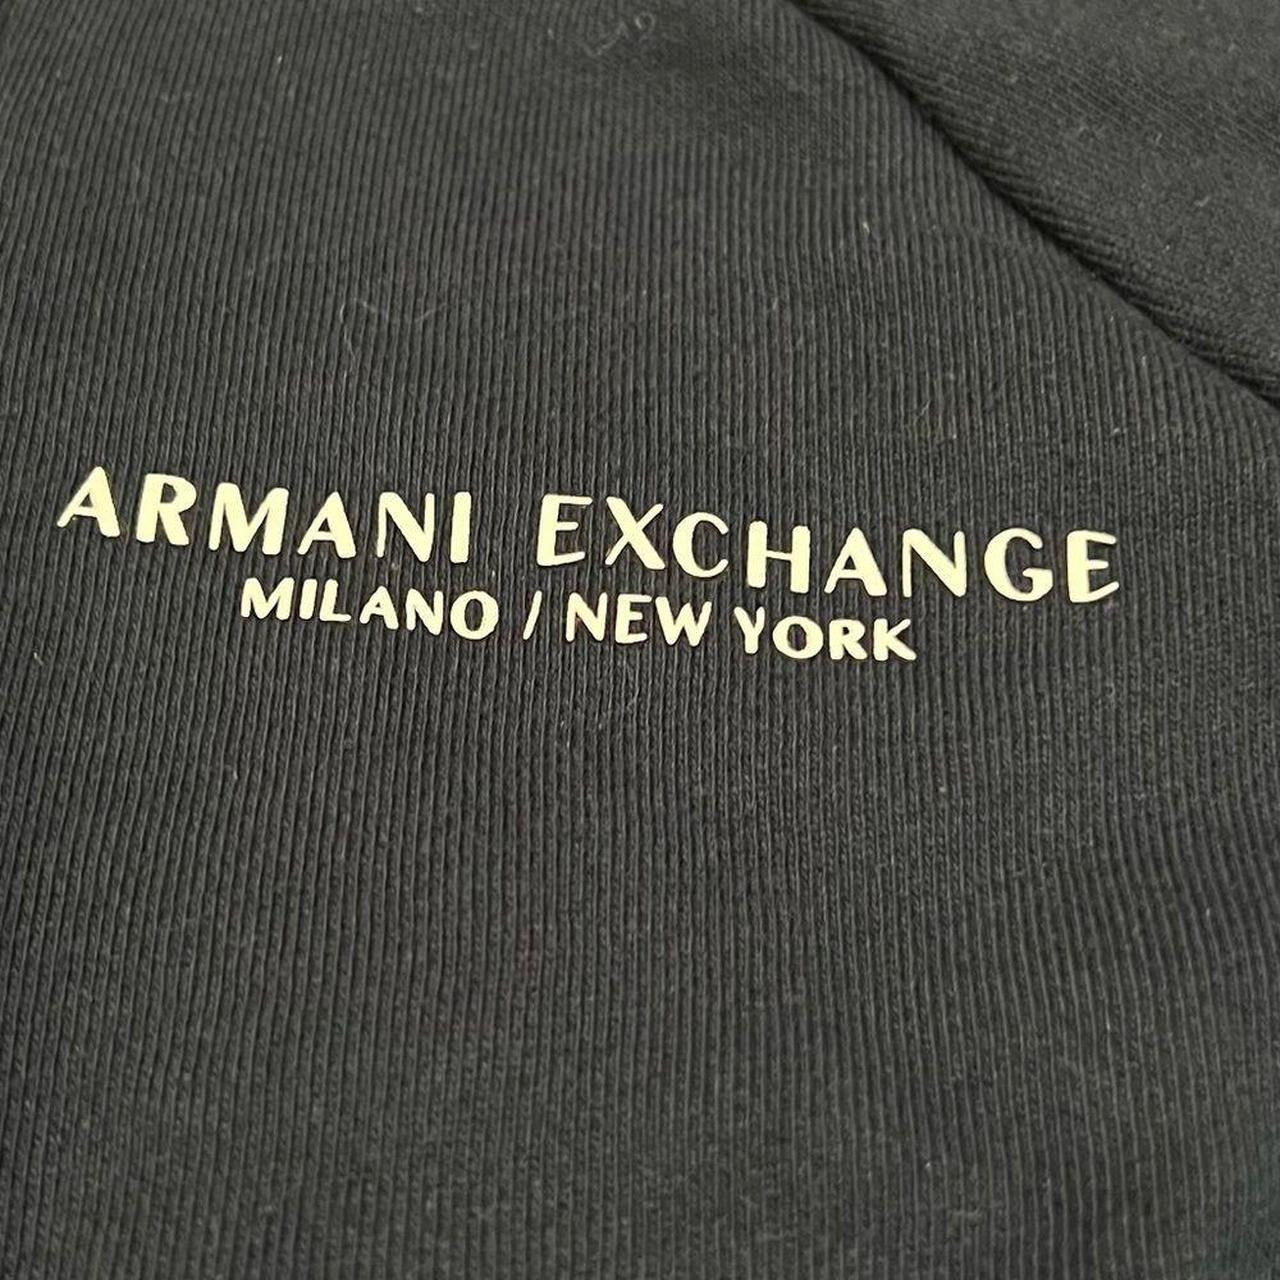 Milano New York zip up sweatshirt